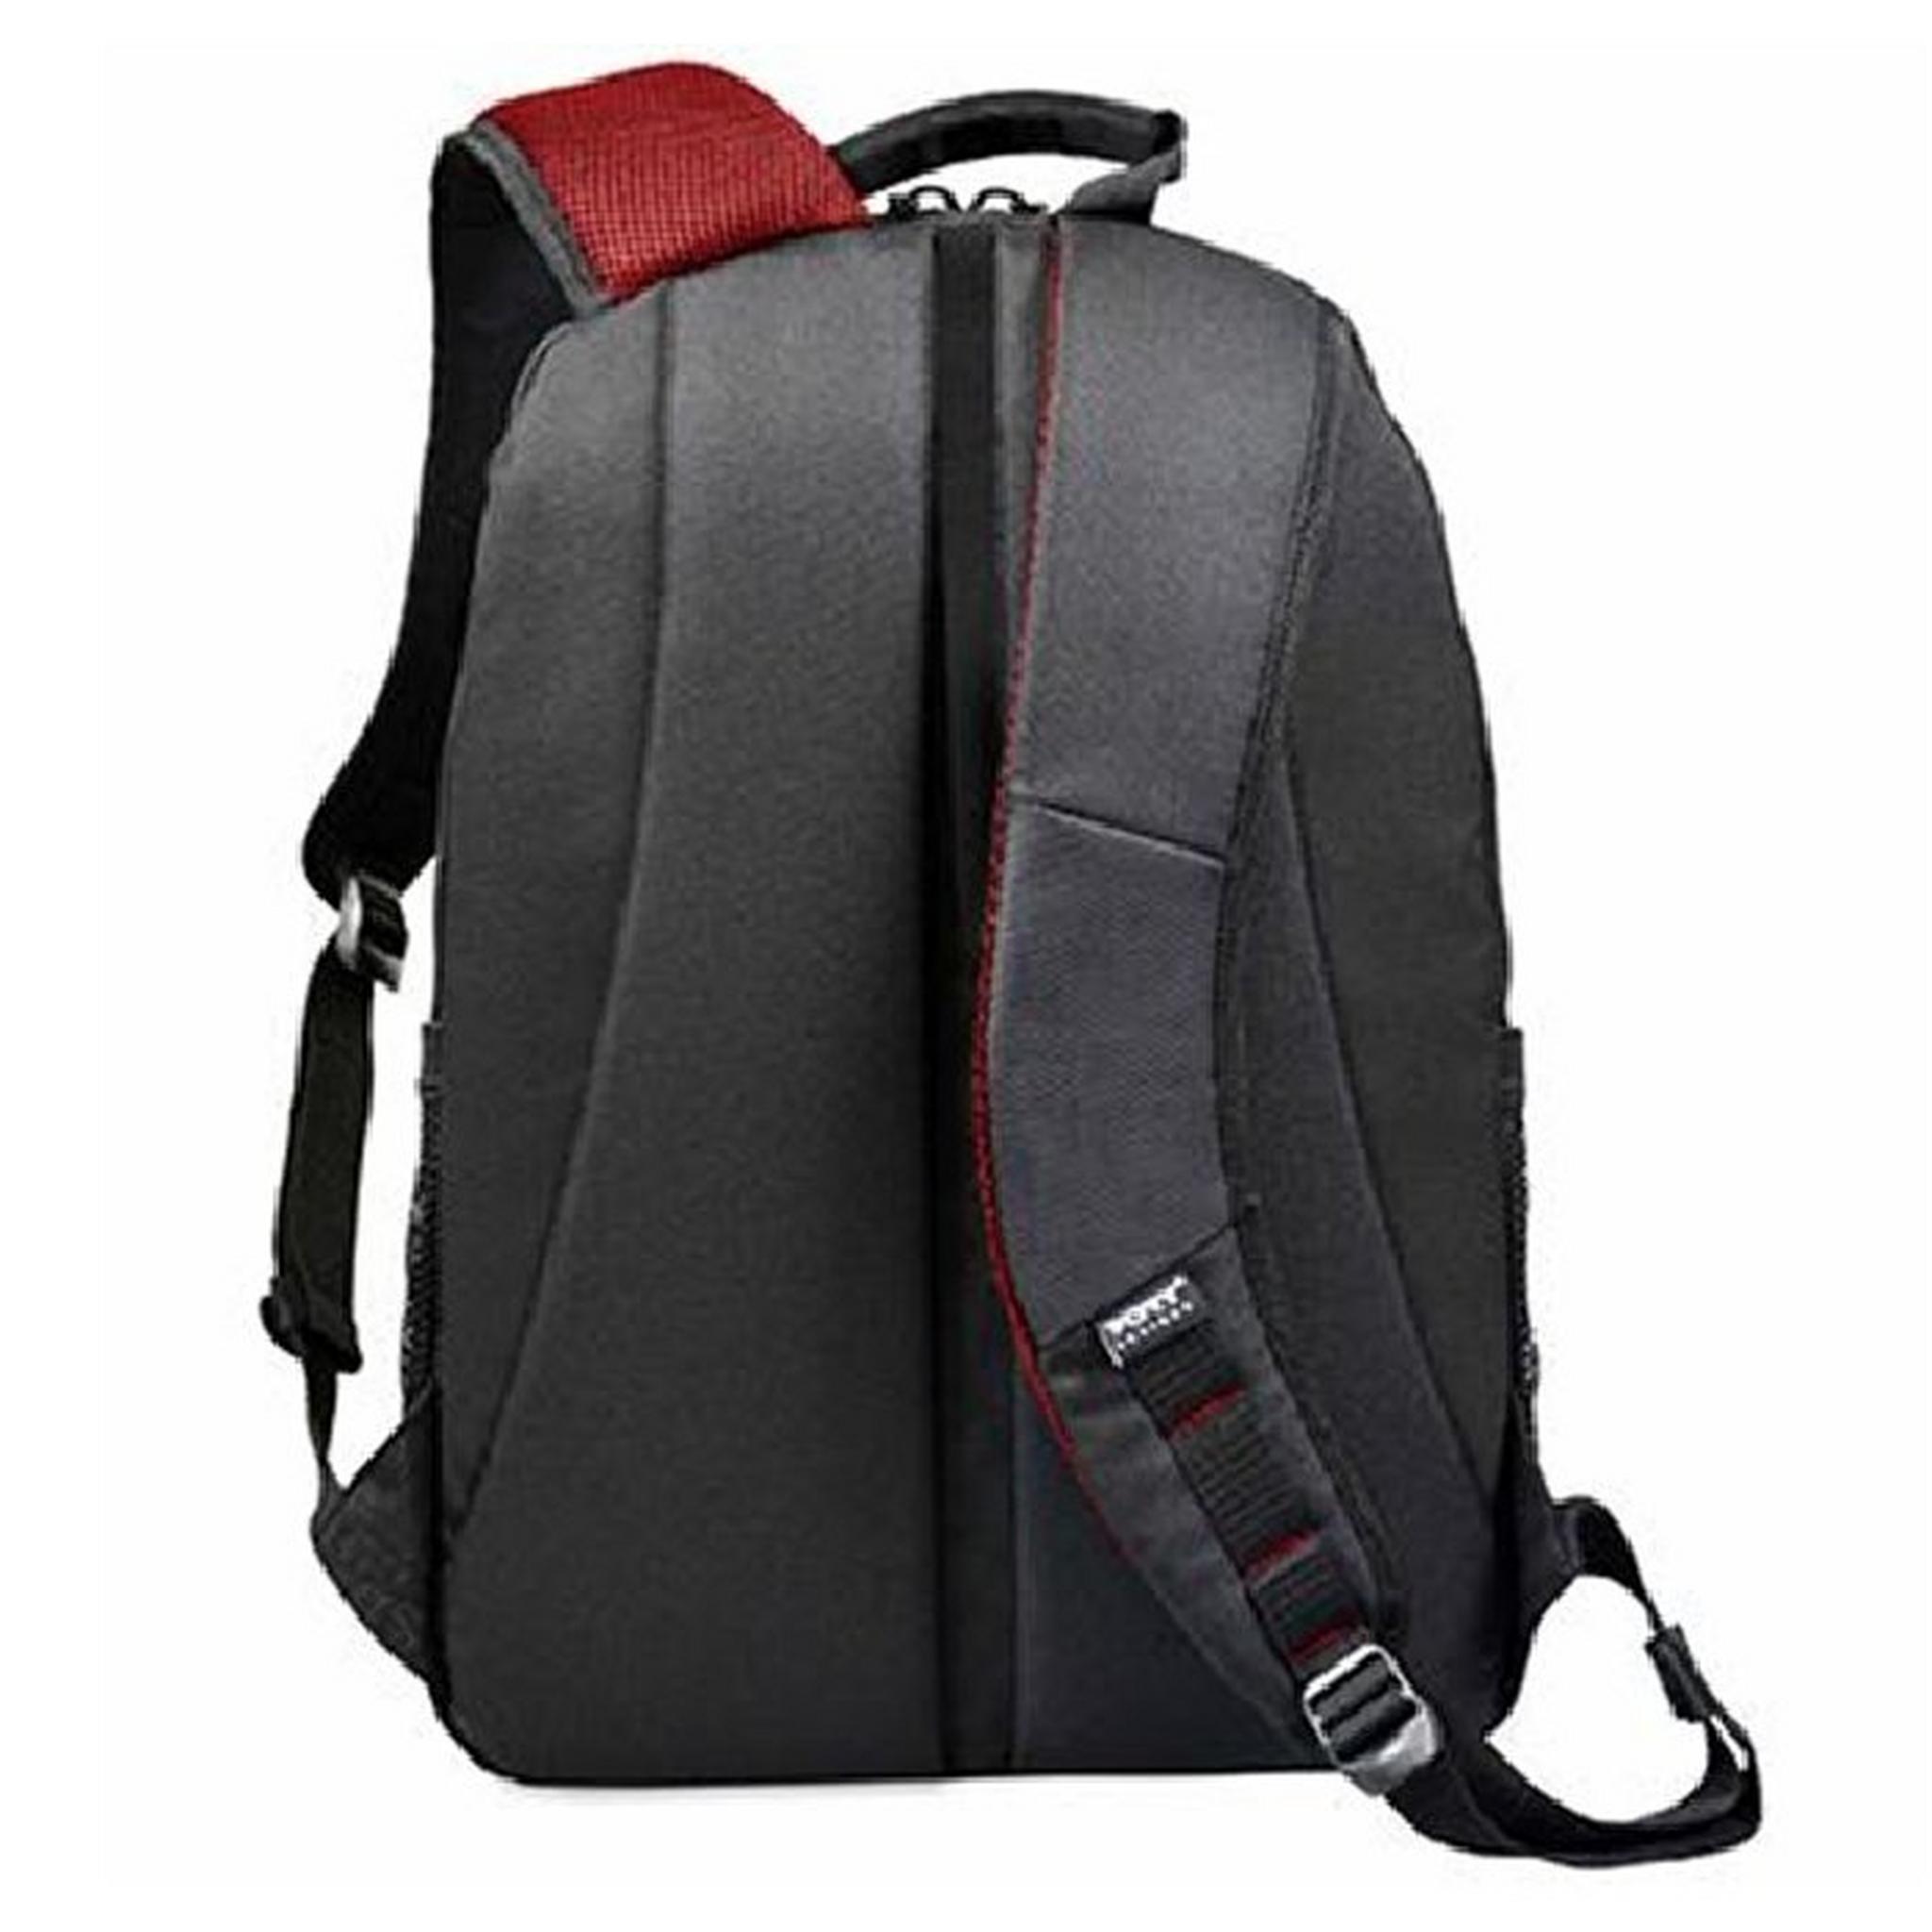 Port Houston Backpack, 17.3 inch, 110276- Black